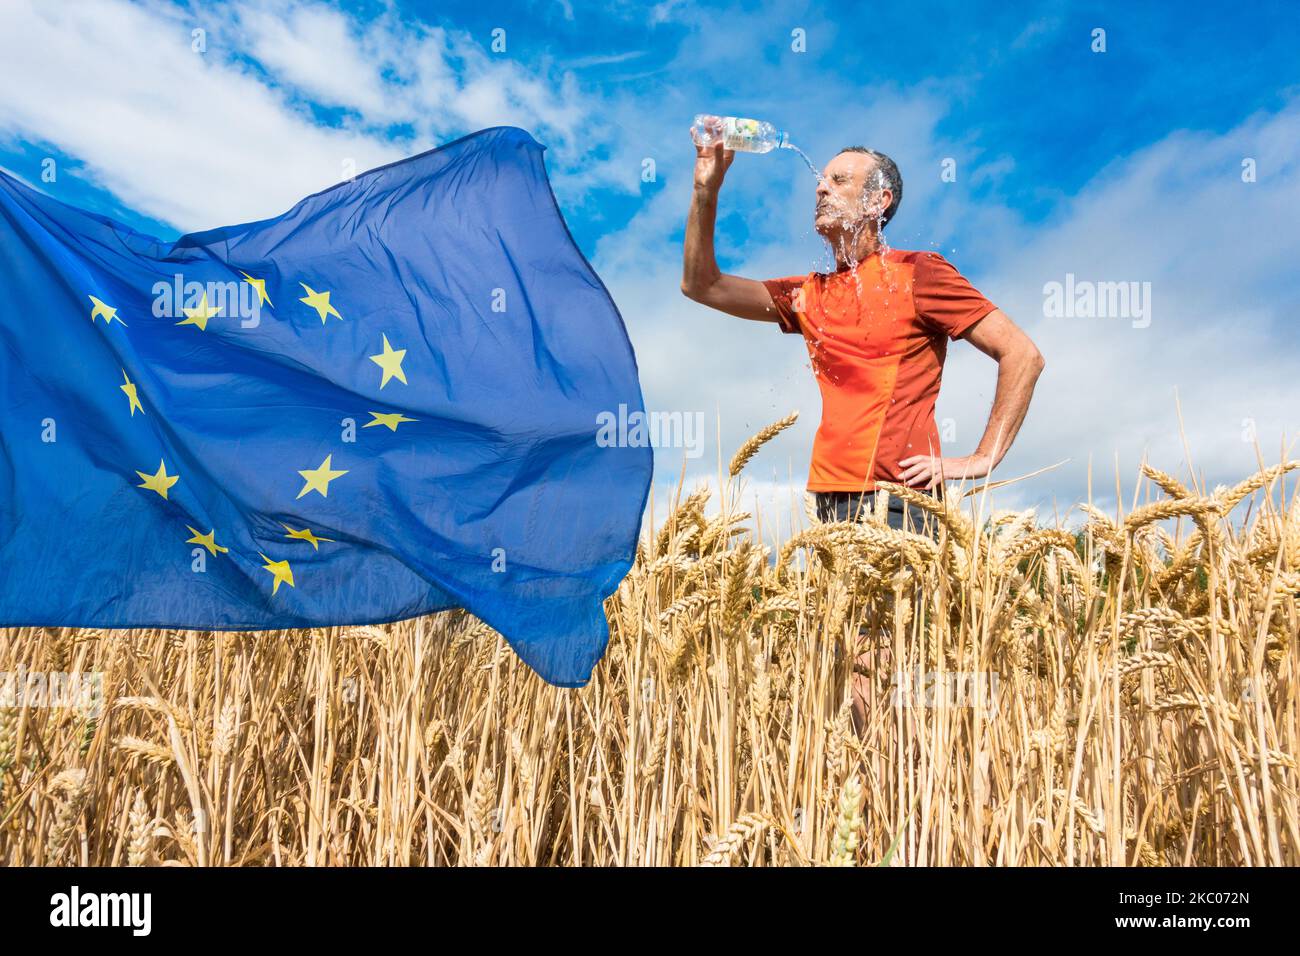 Jogger auf dem Fußweg neben dem Weizenfeld mit EU-Flagge. Globale Erwärmung, Klimawandel, Krise, Dürre, Hitzewelle... Konzept, Europa Stockfoto